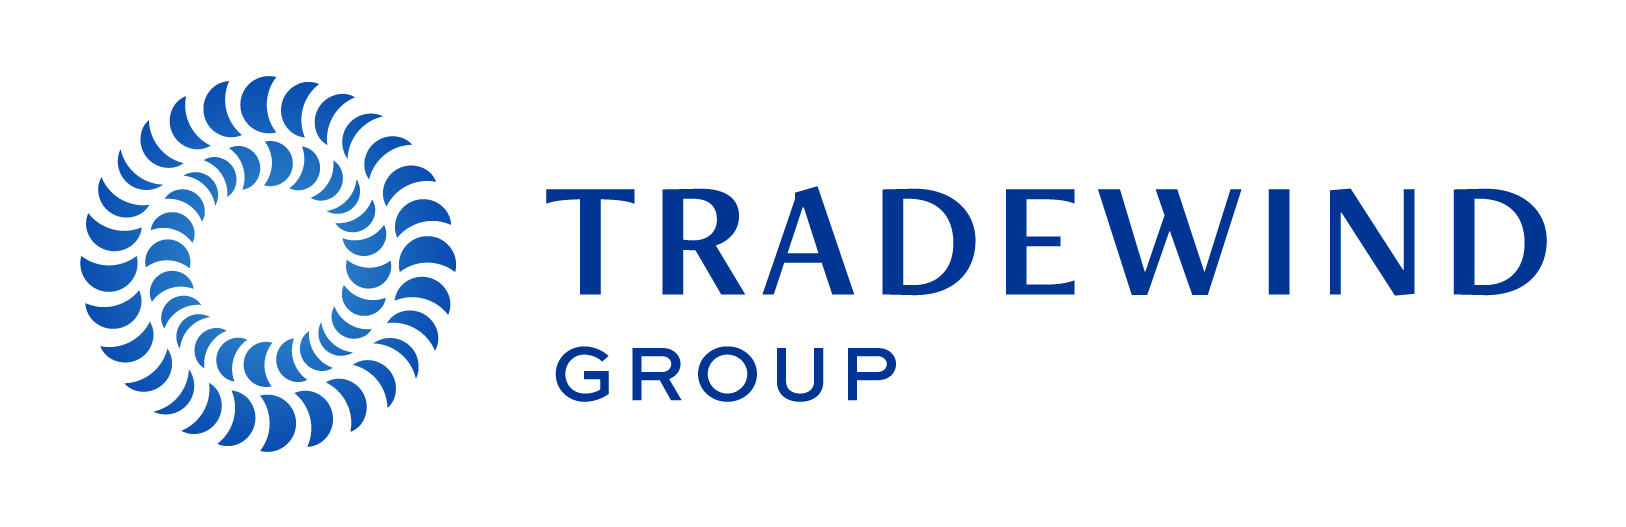 B2- Tradewind Group